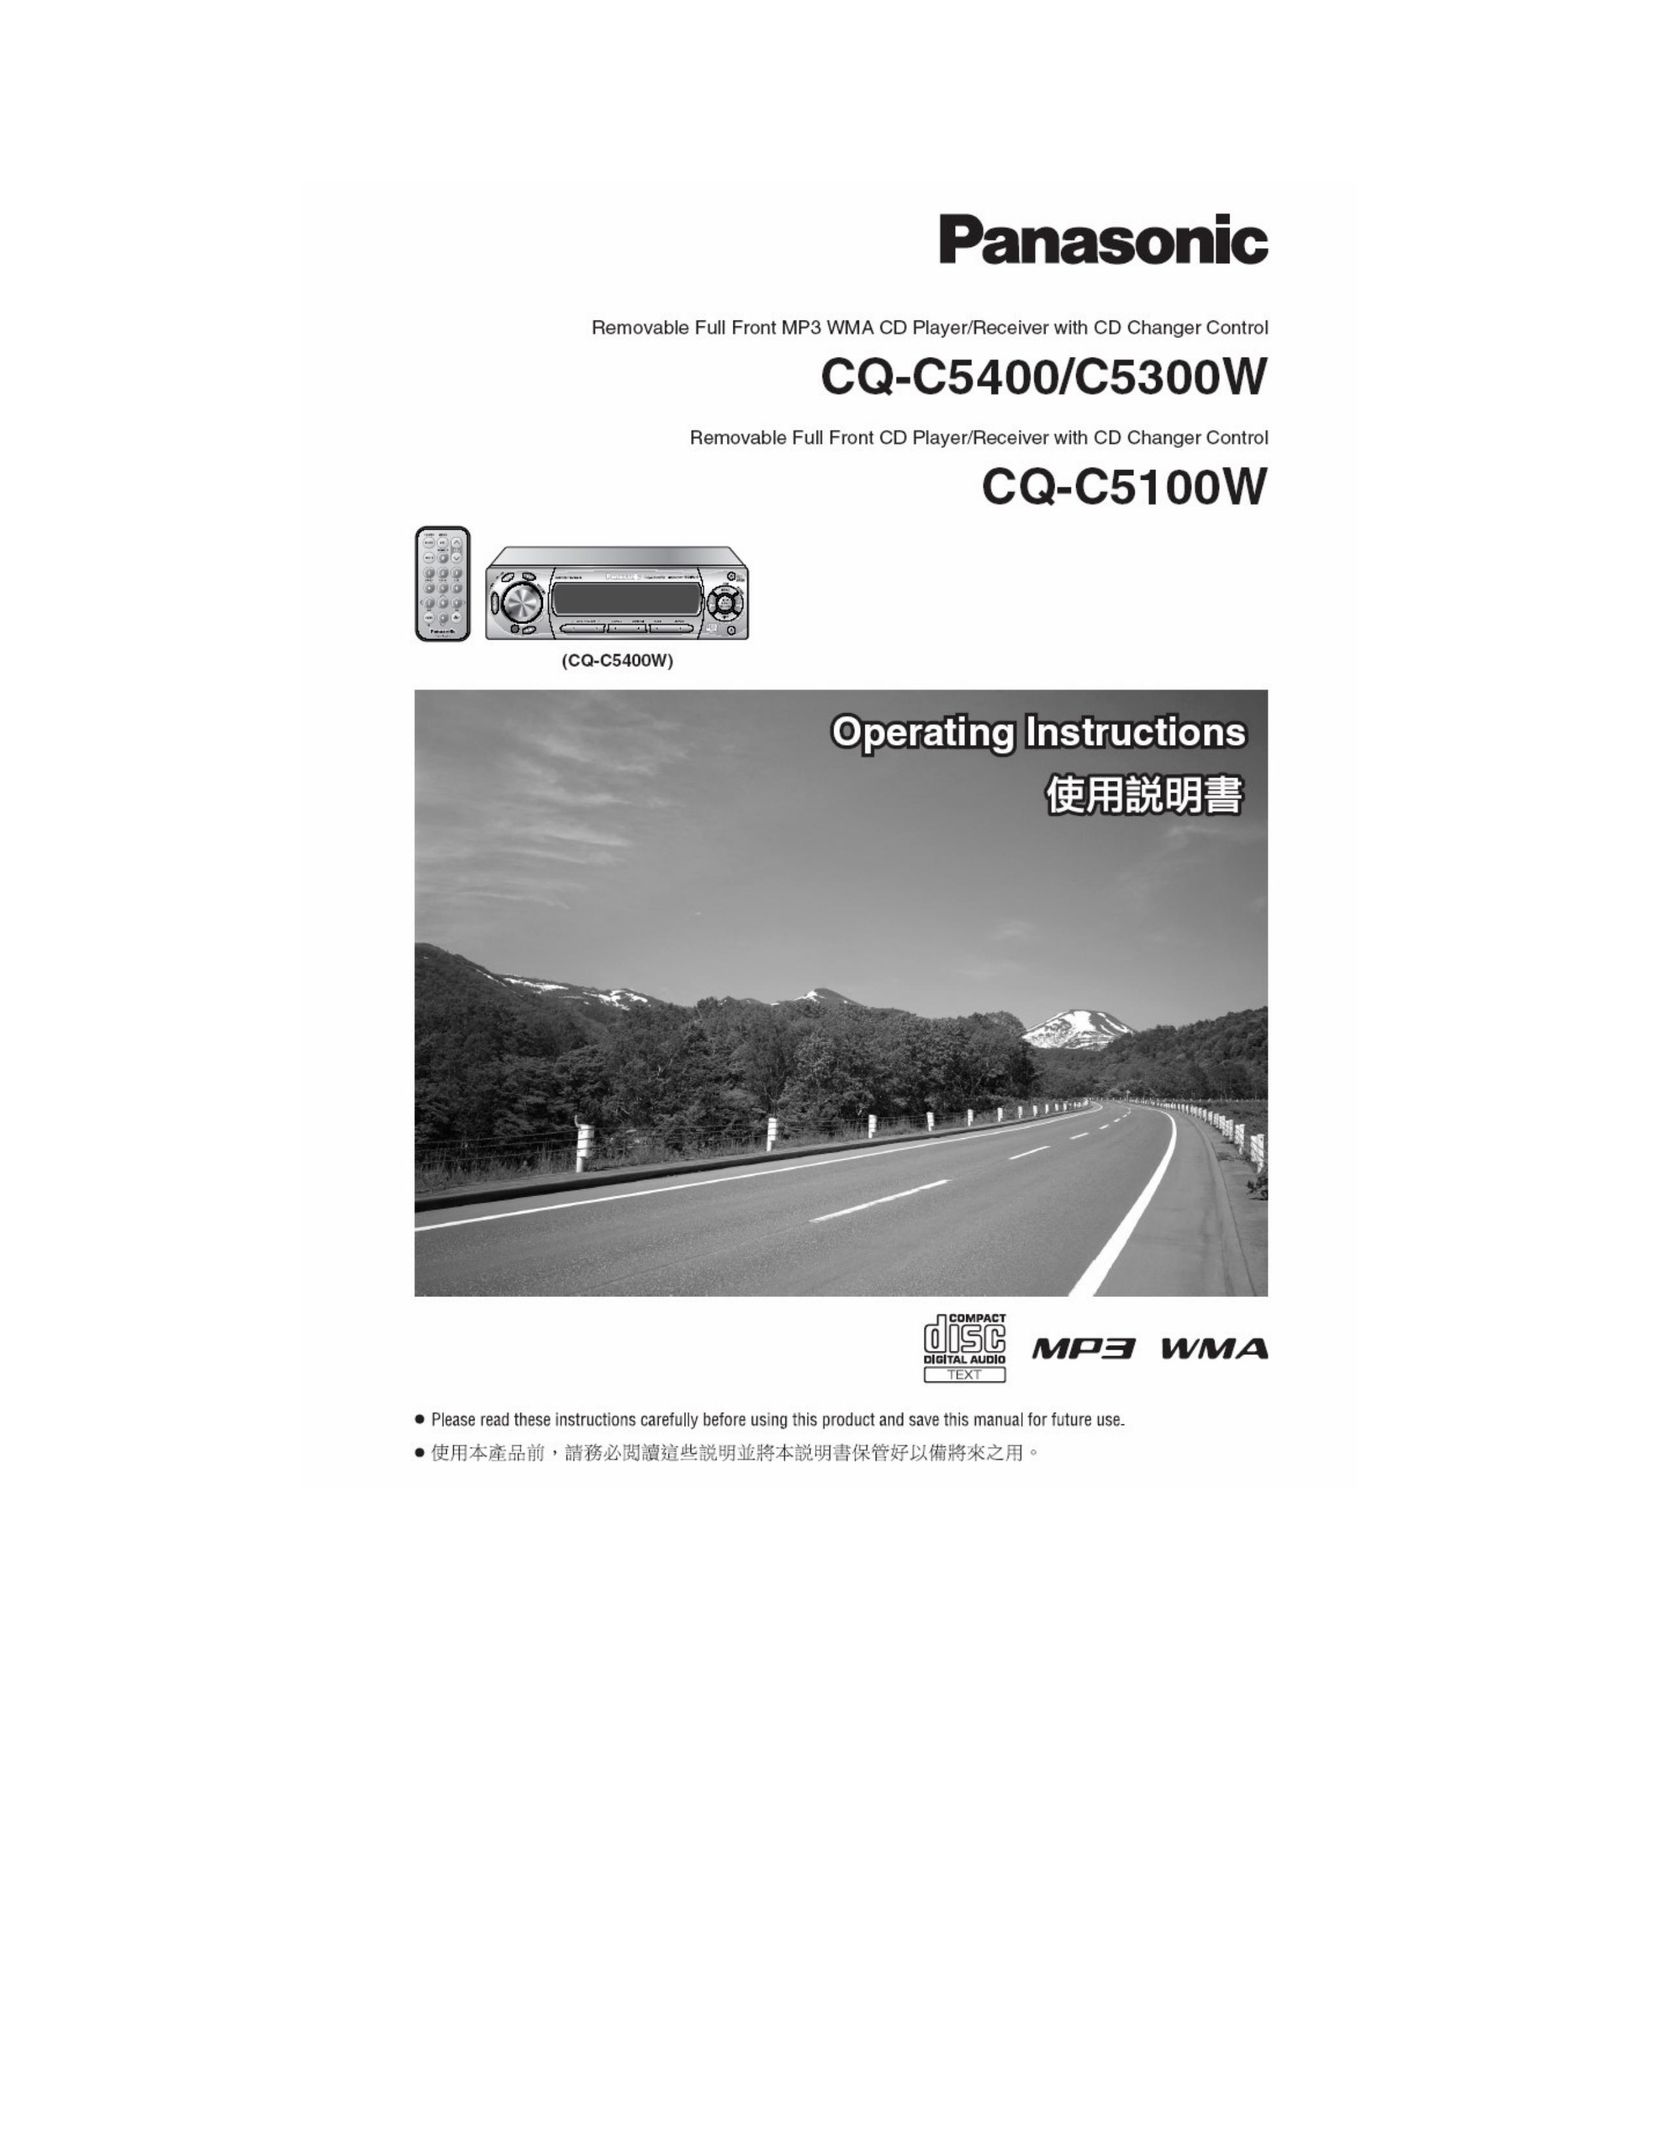 Panasonic CQ-C5100W Portable CD Player User Manual